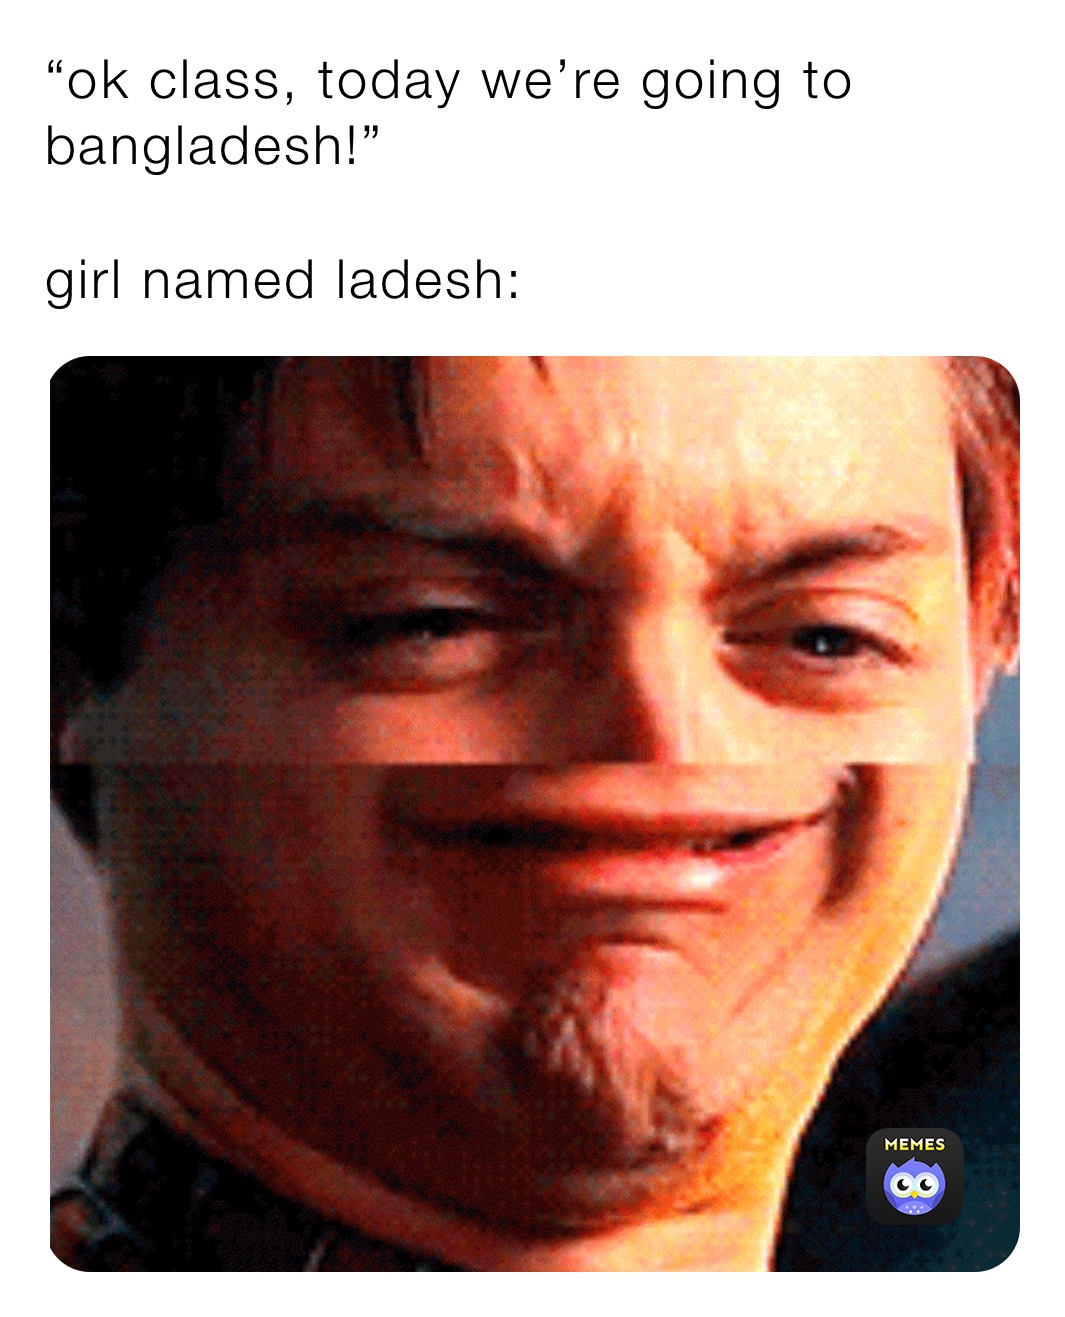 “ok class, today we’re going to bangladesh!”

girl named ladesh: